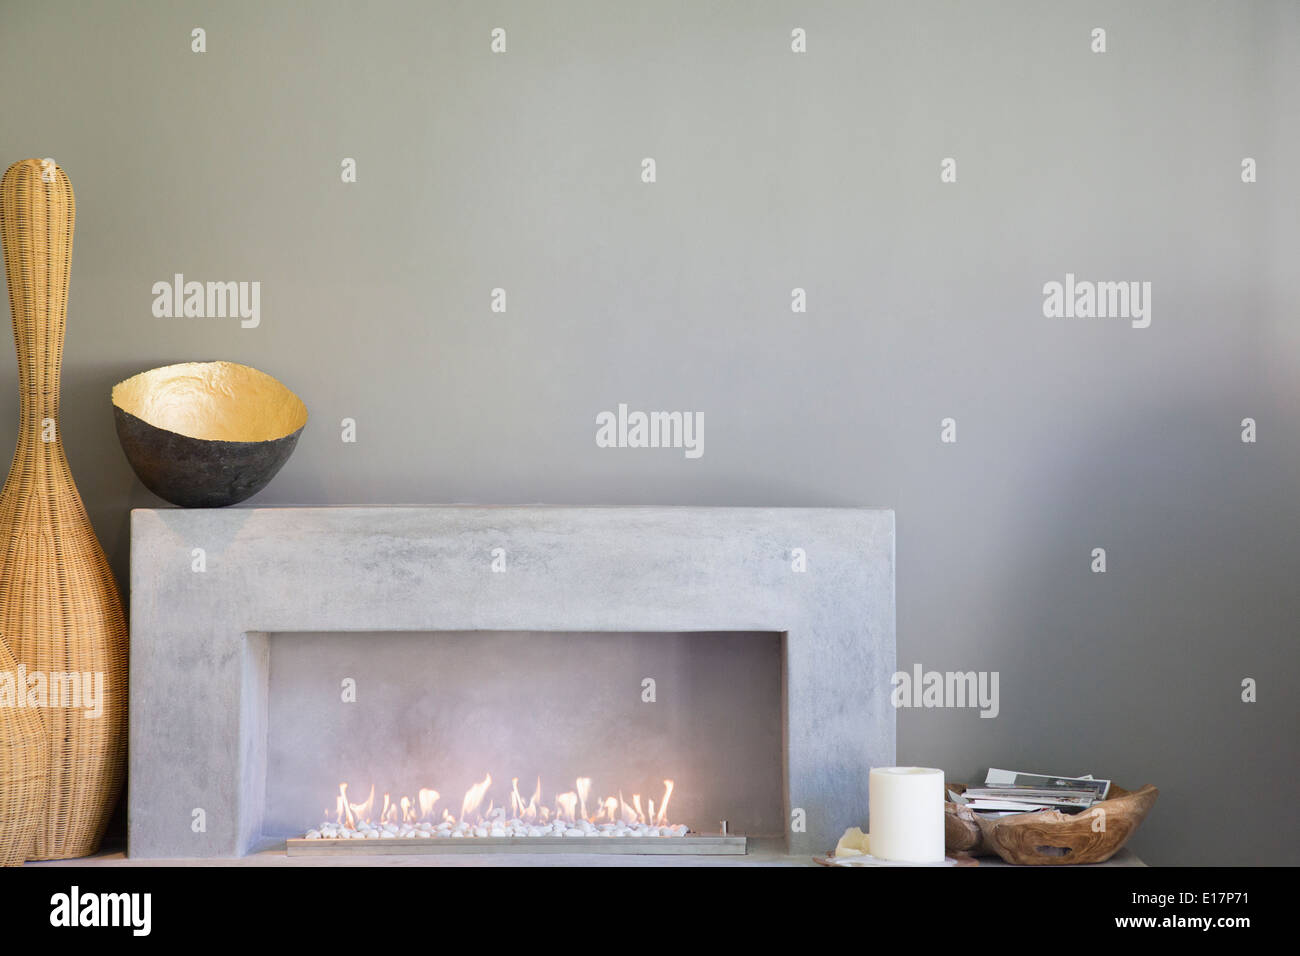 Apple art above fireplace in modern living room Stock Photo